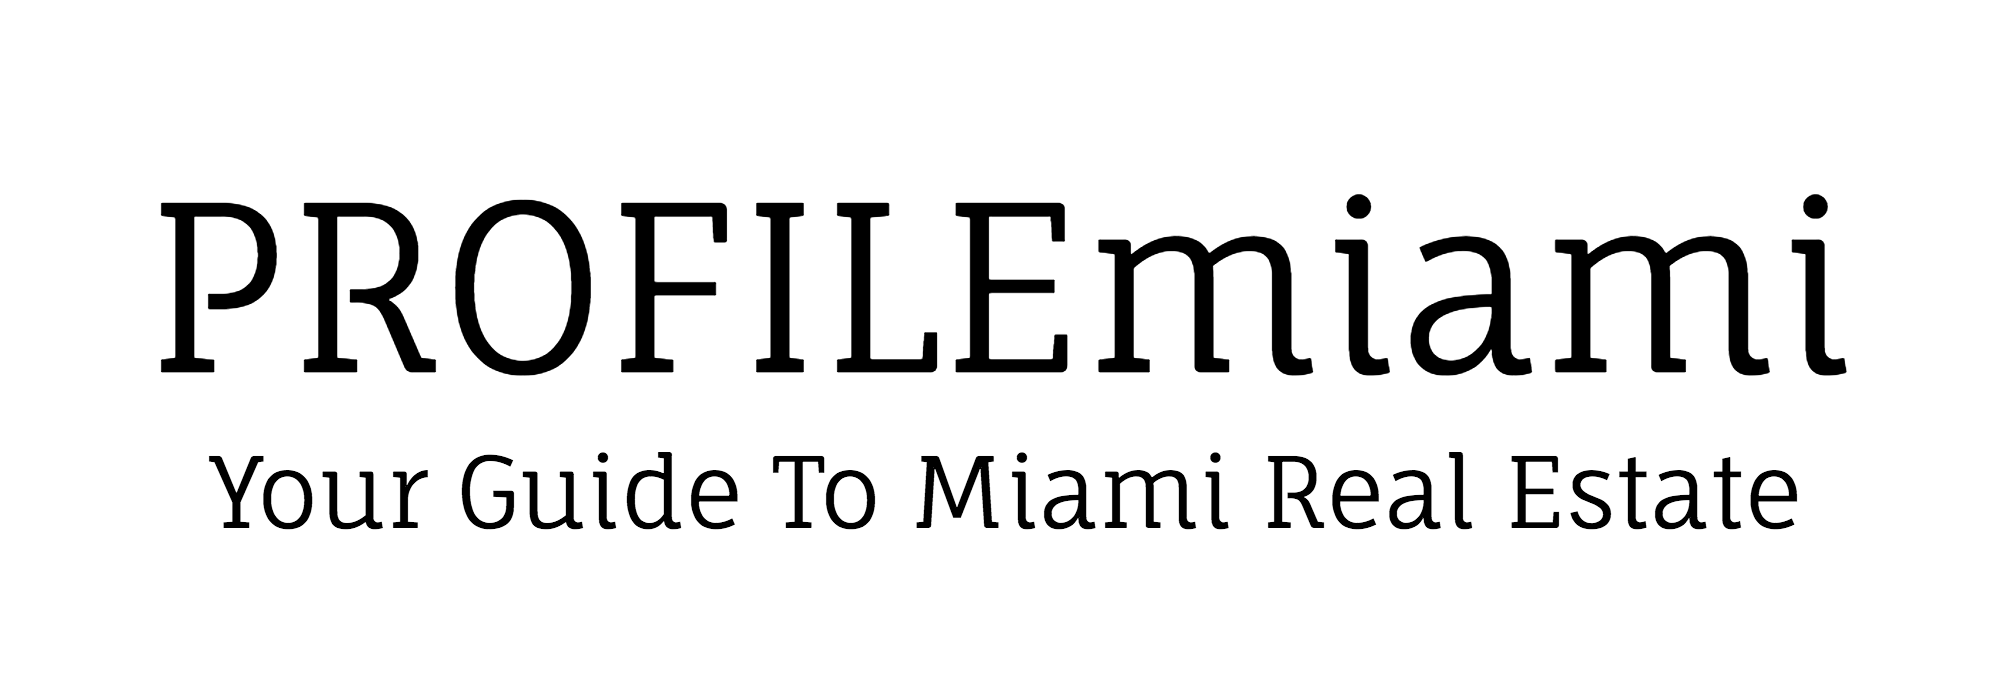 PROFILEmiami-logo-black old.png